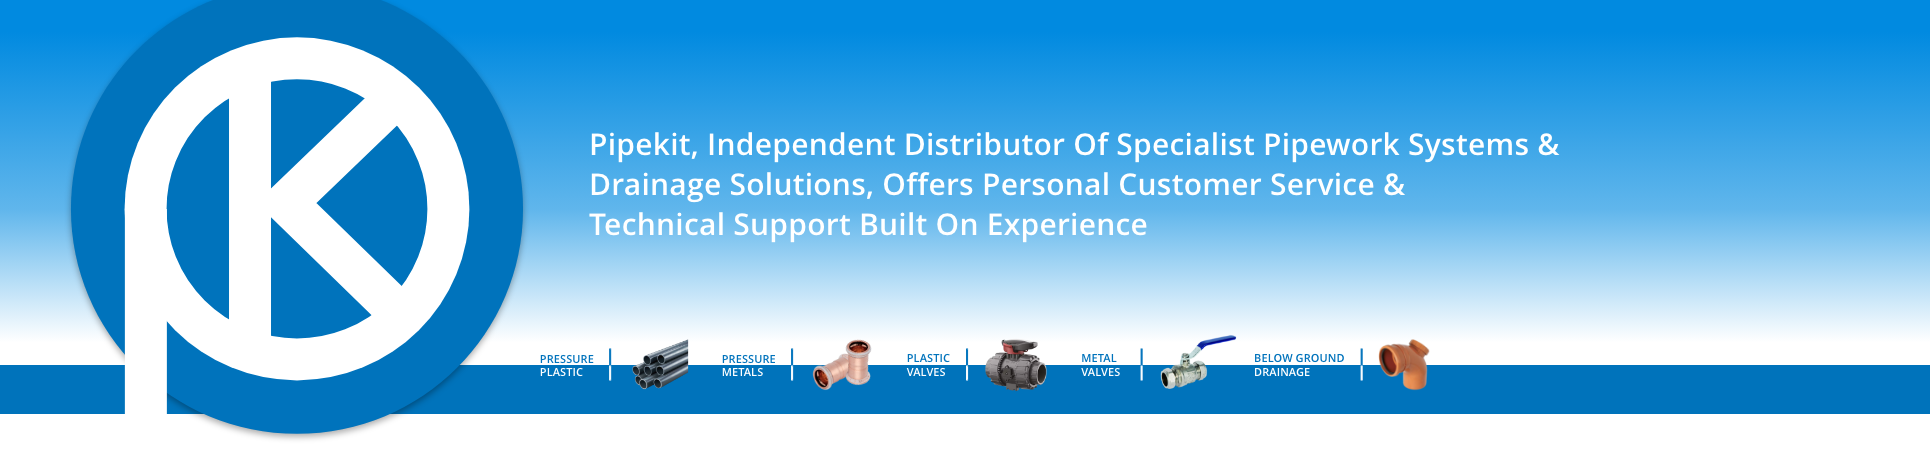 Pipekit Independent Distributor 